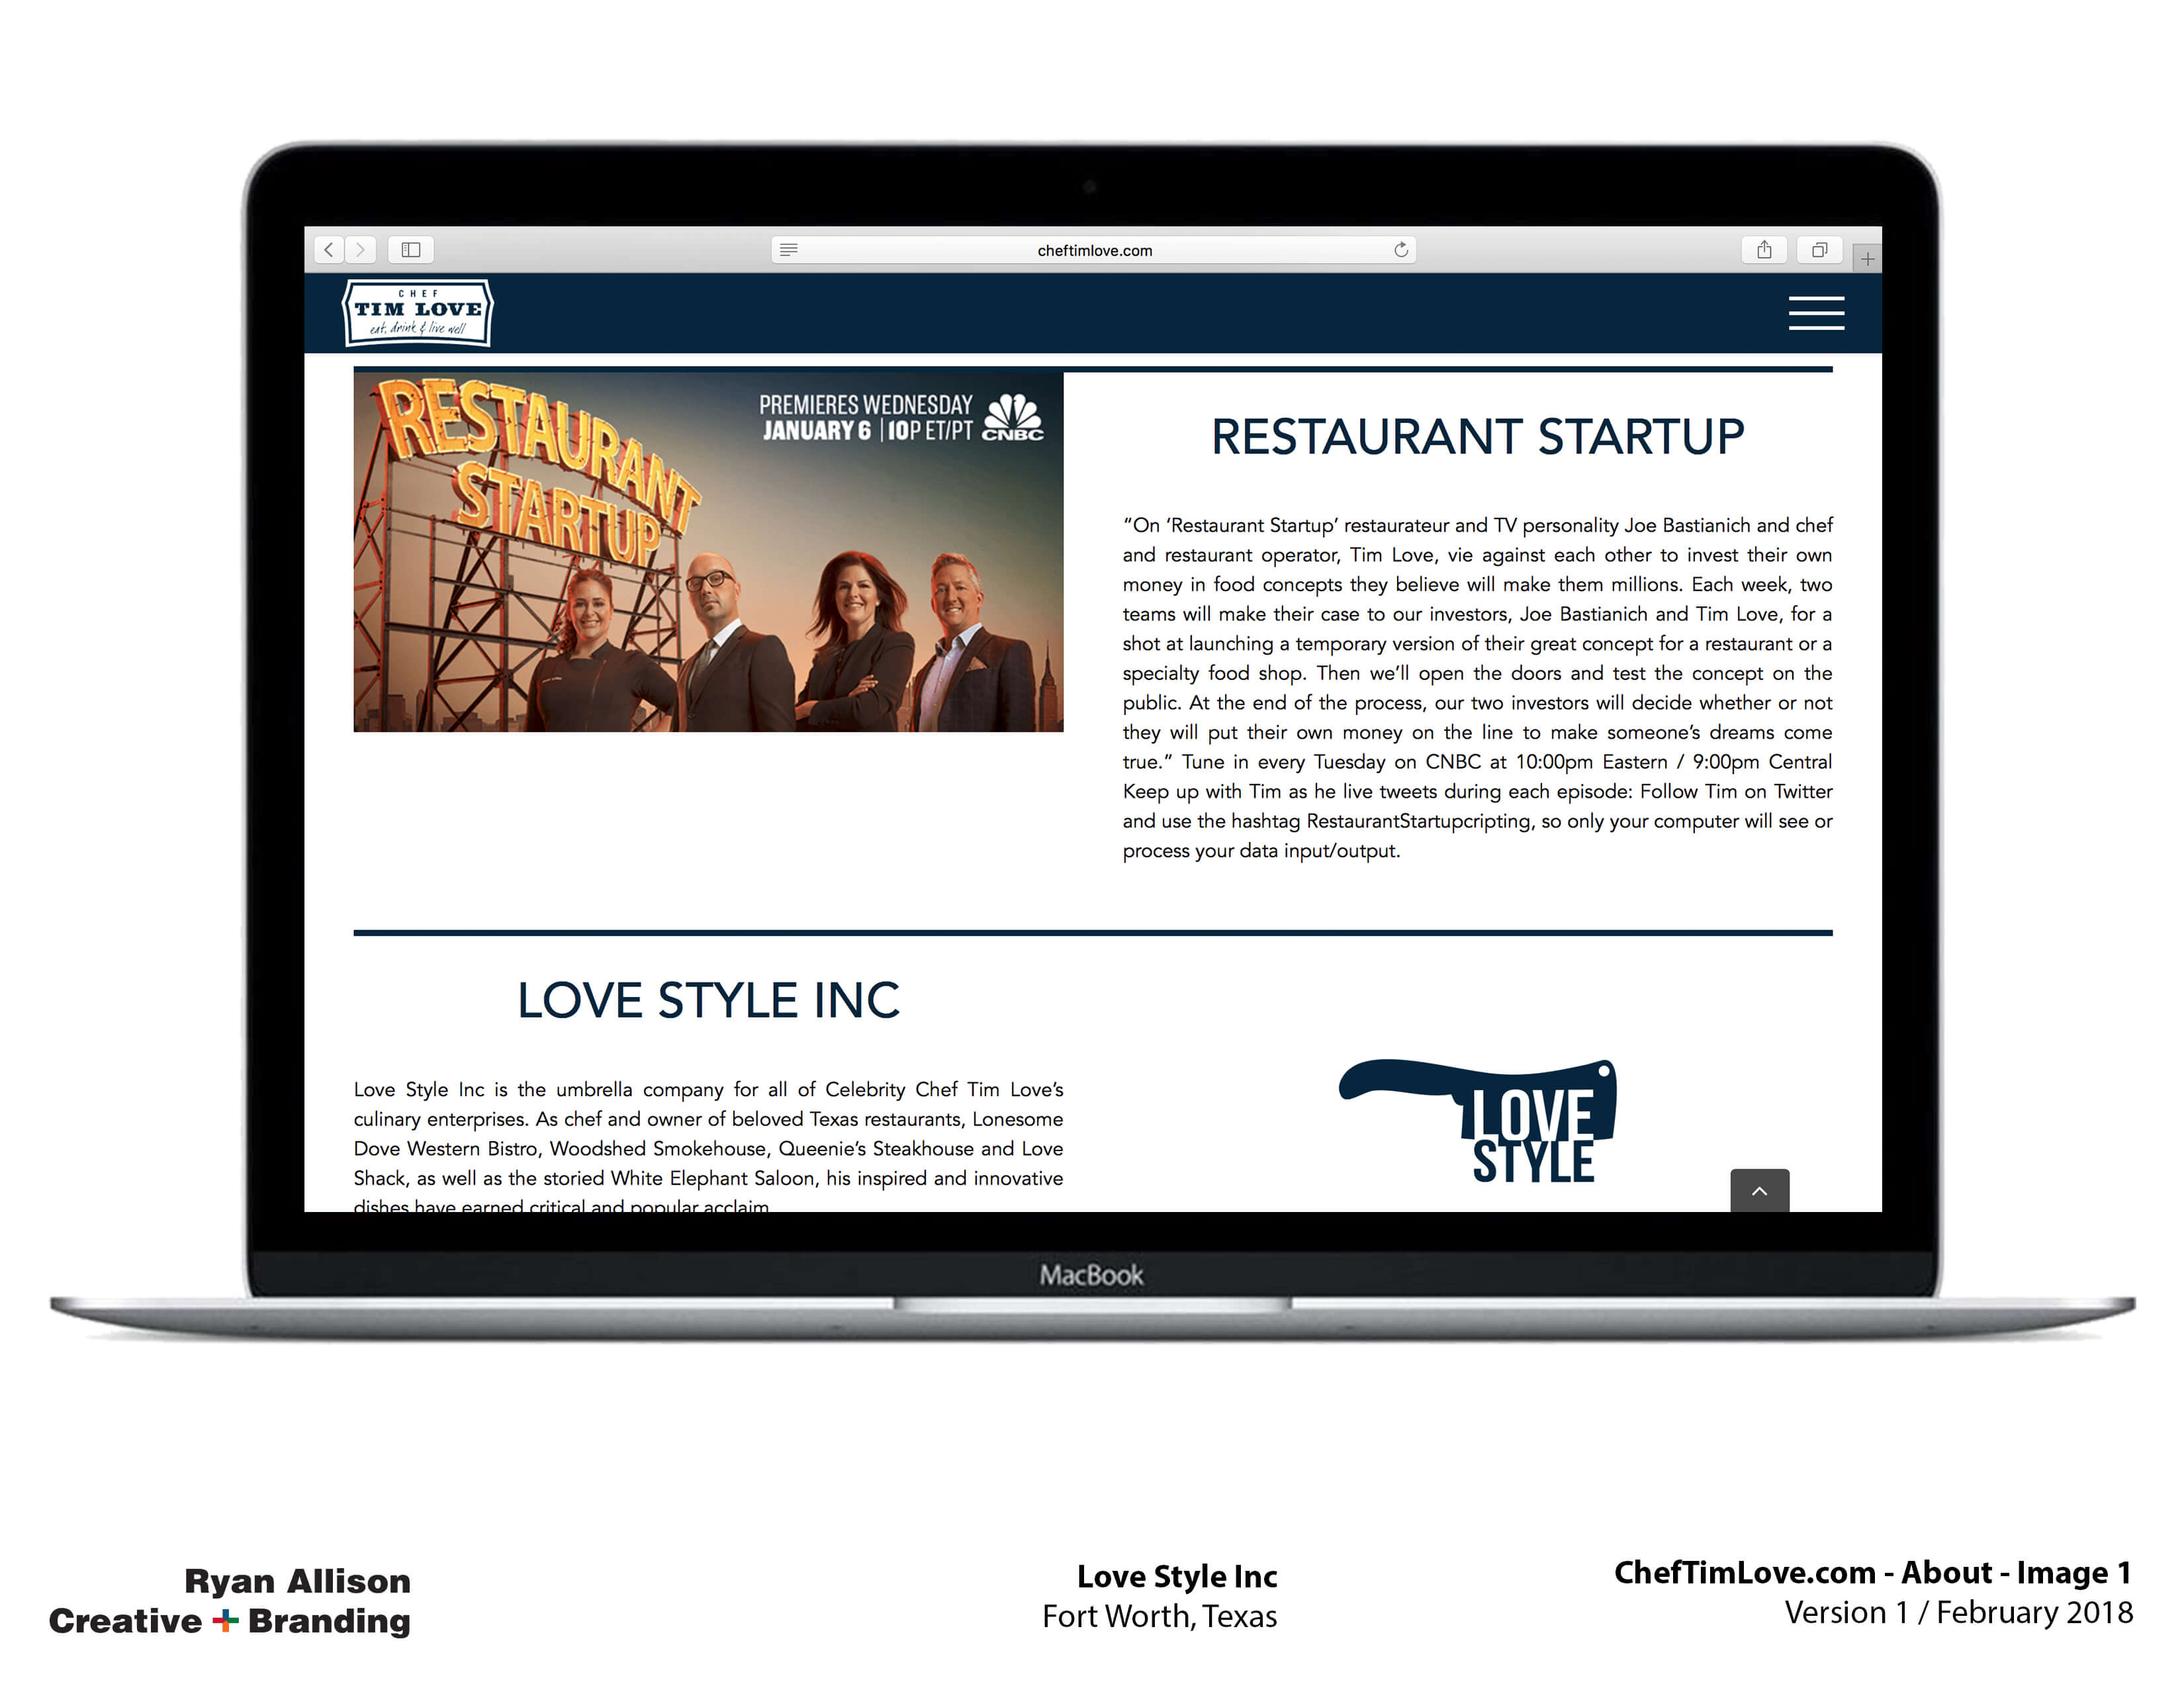 Love Style Inc Chef Tim Love Website About 1 - Project - Ryan Allison Creative + Branding